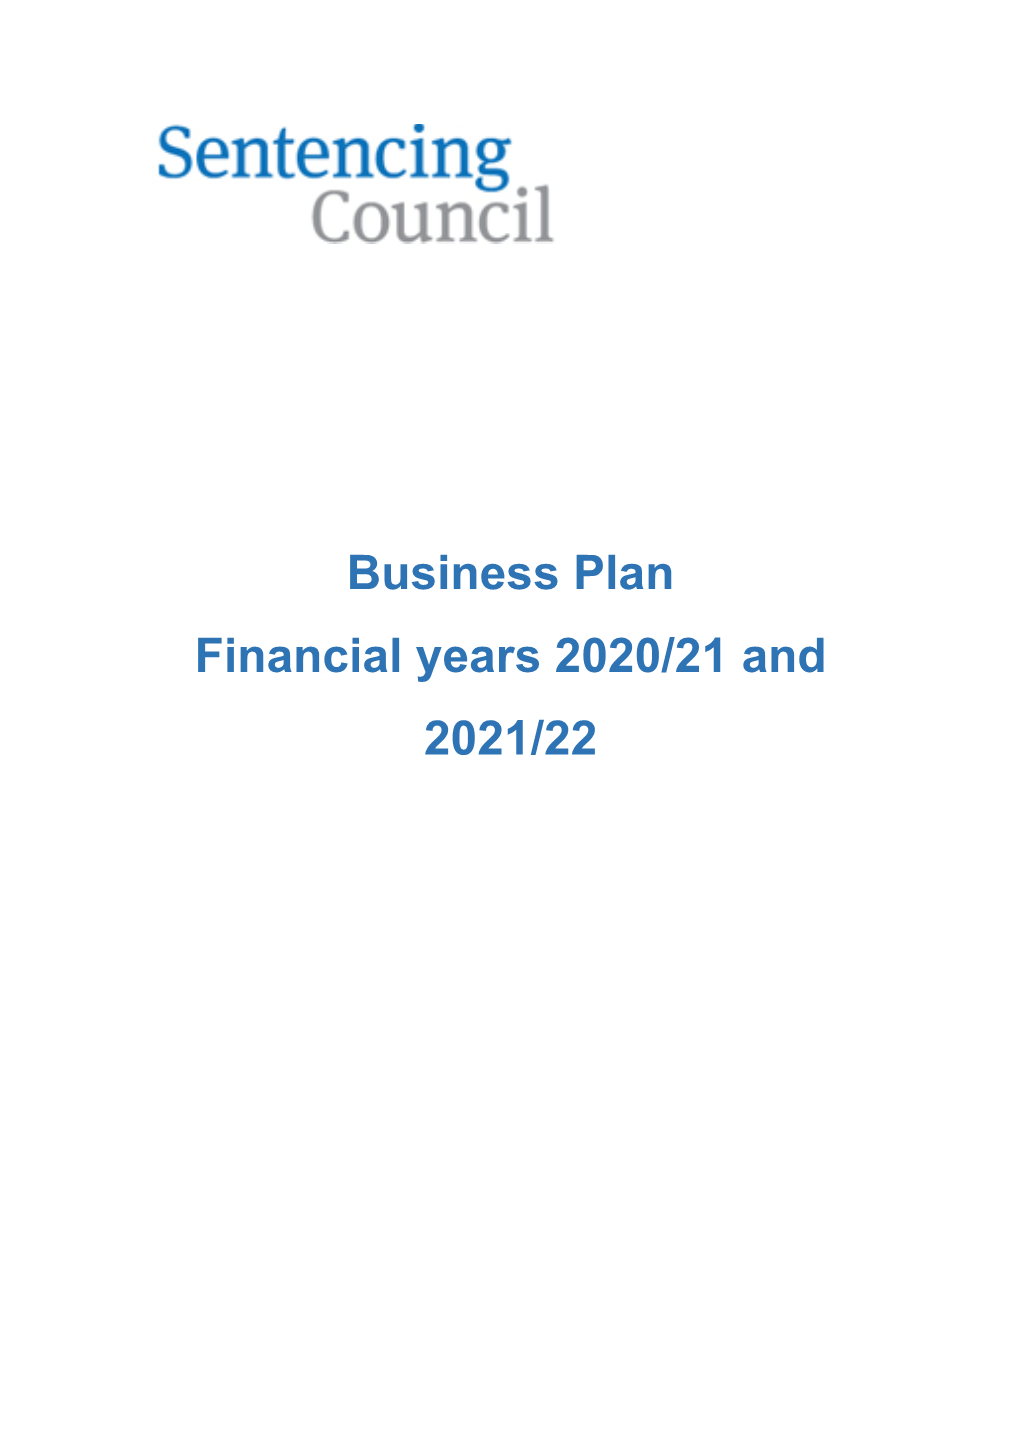 Sentencing Council Business Plan 2020-21